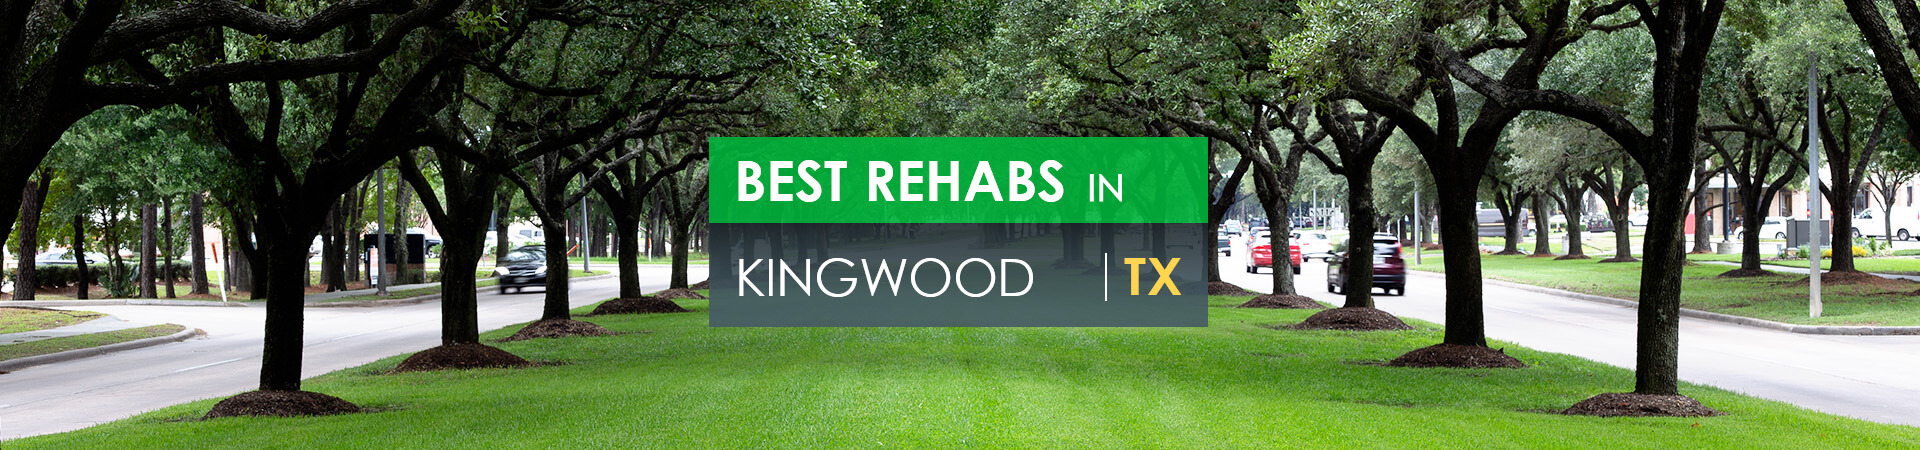 Best rehabs in Kingwood, TX